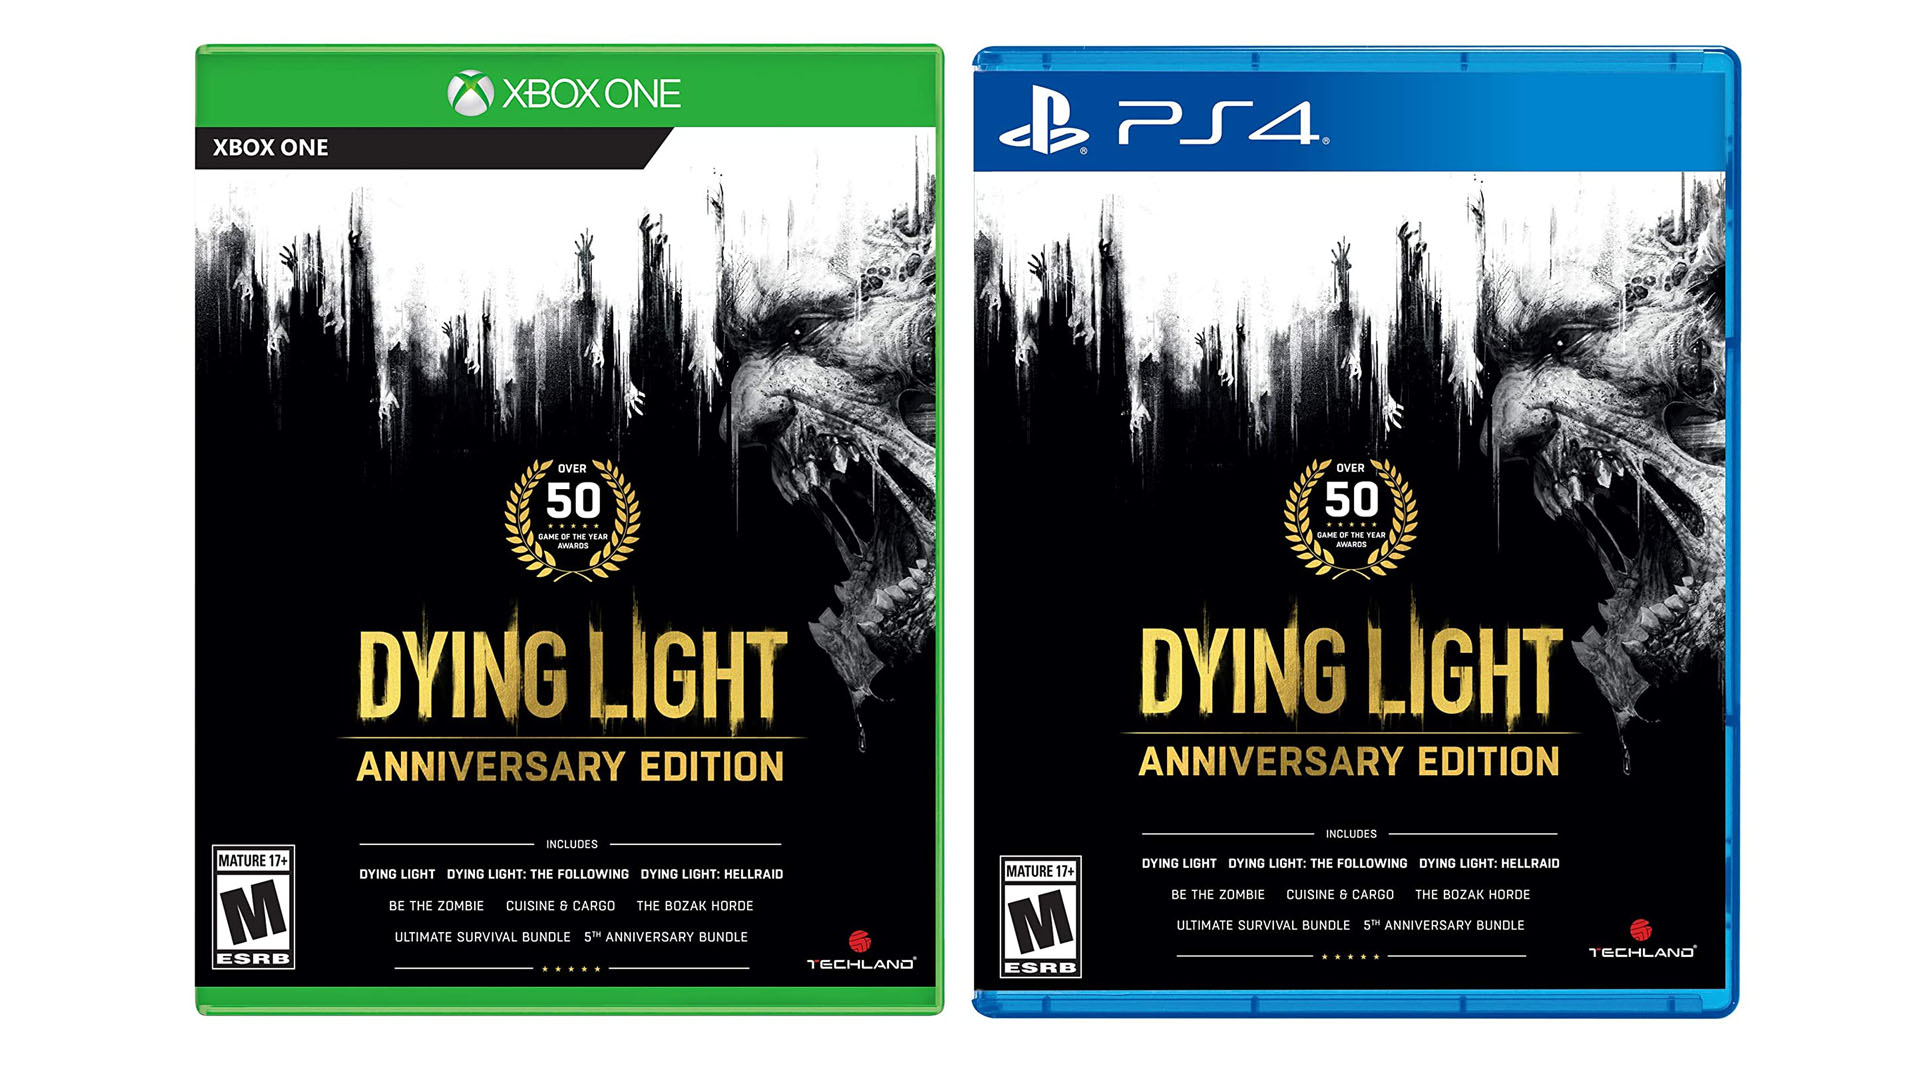 Dying Light Anniversary Edition 10 31 20 1